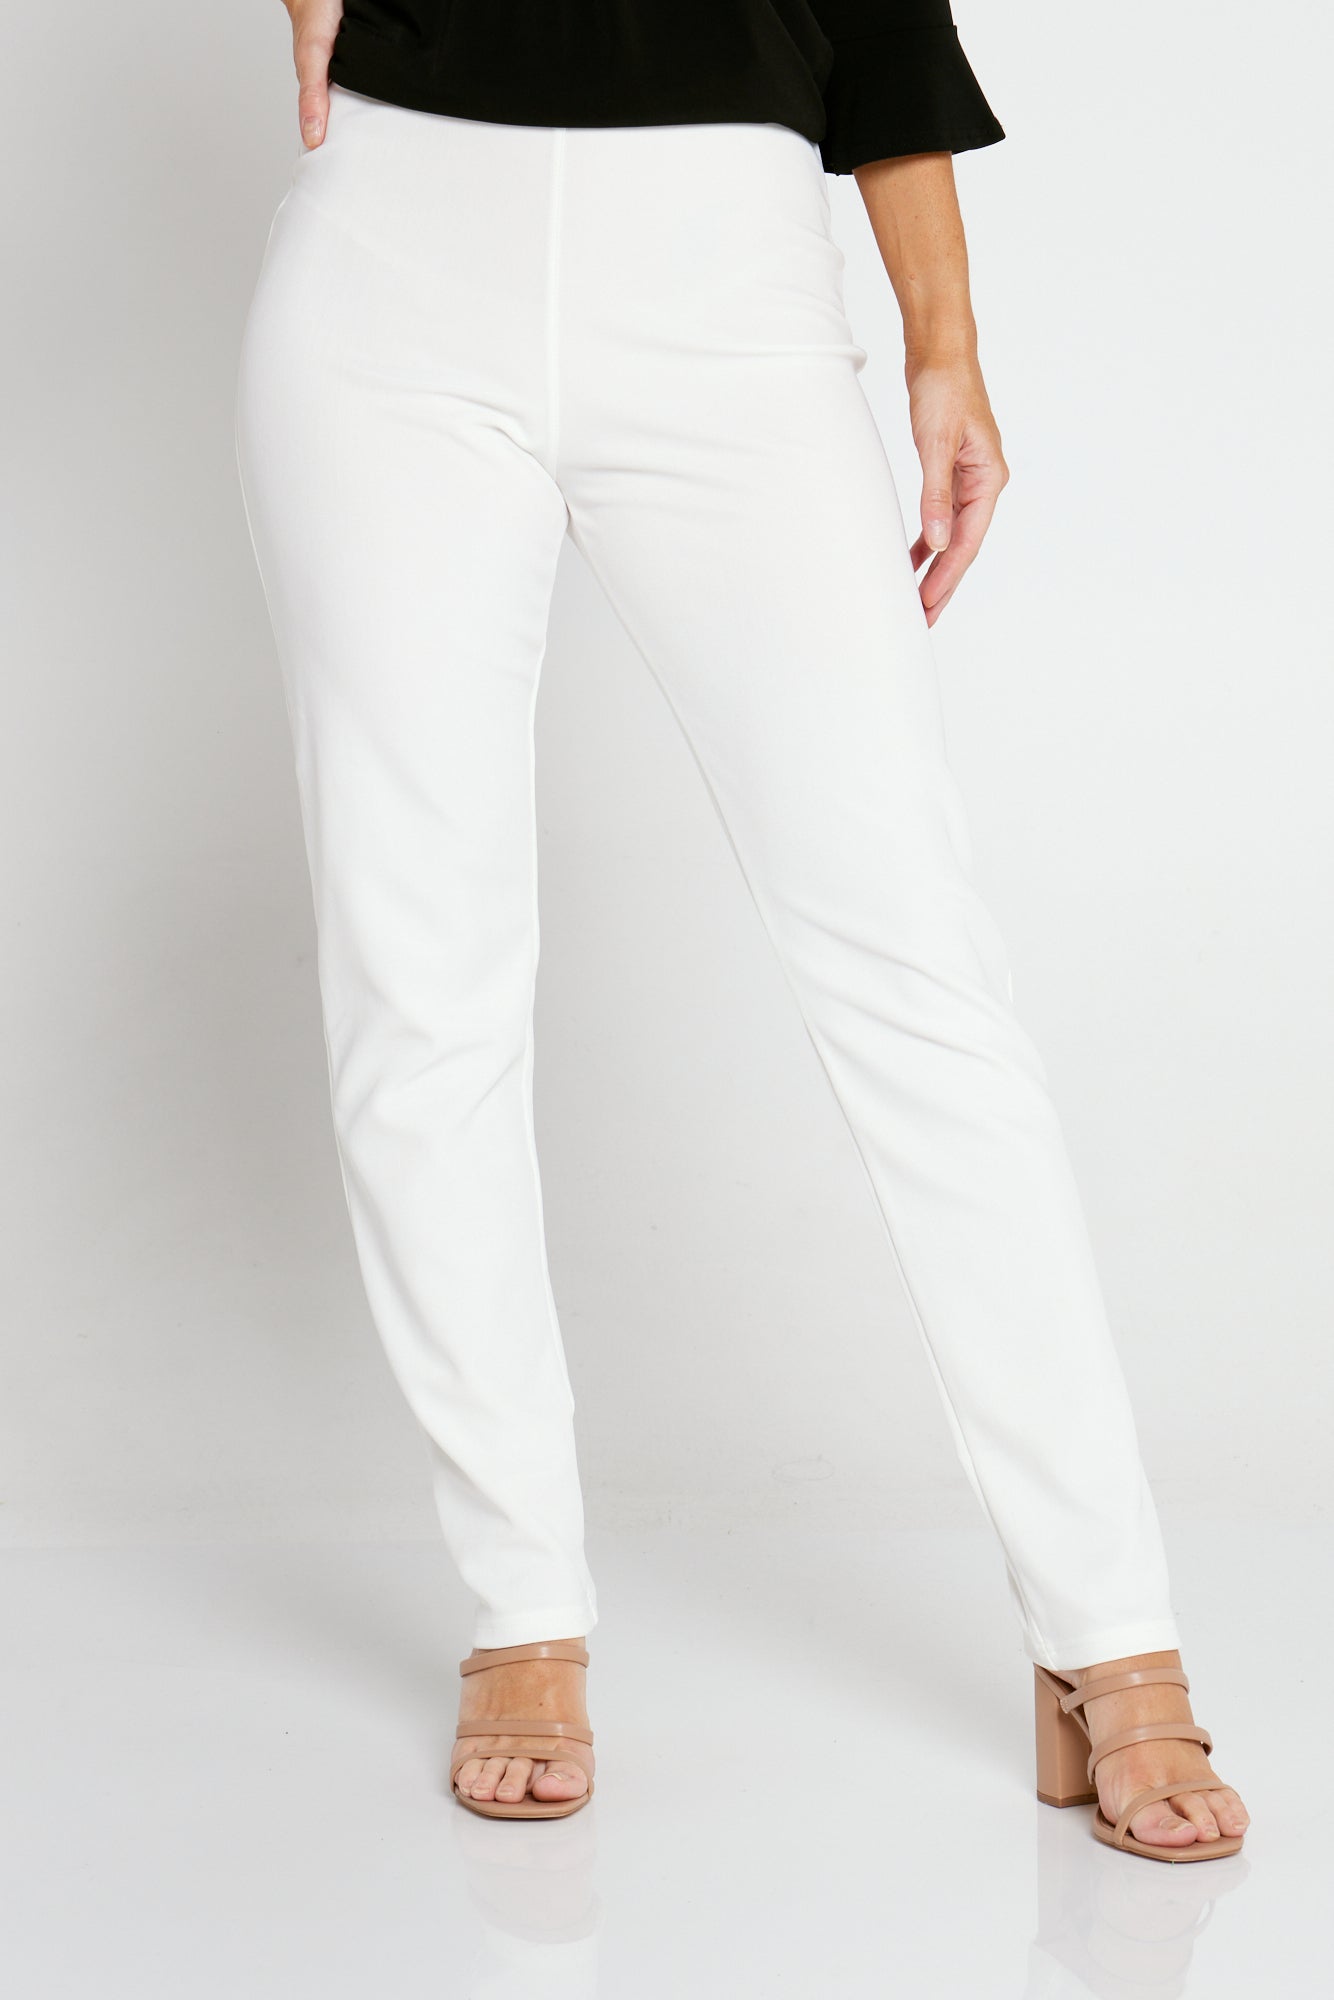 Tori Stretch Cotton Capri - White  Women's Clothes – TULIO Fashion